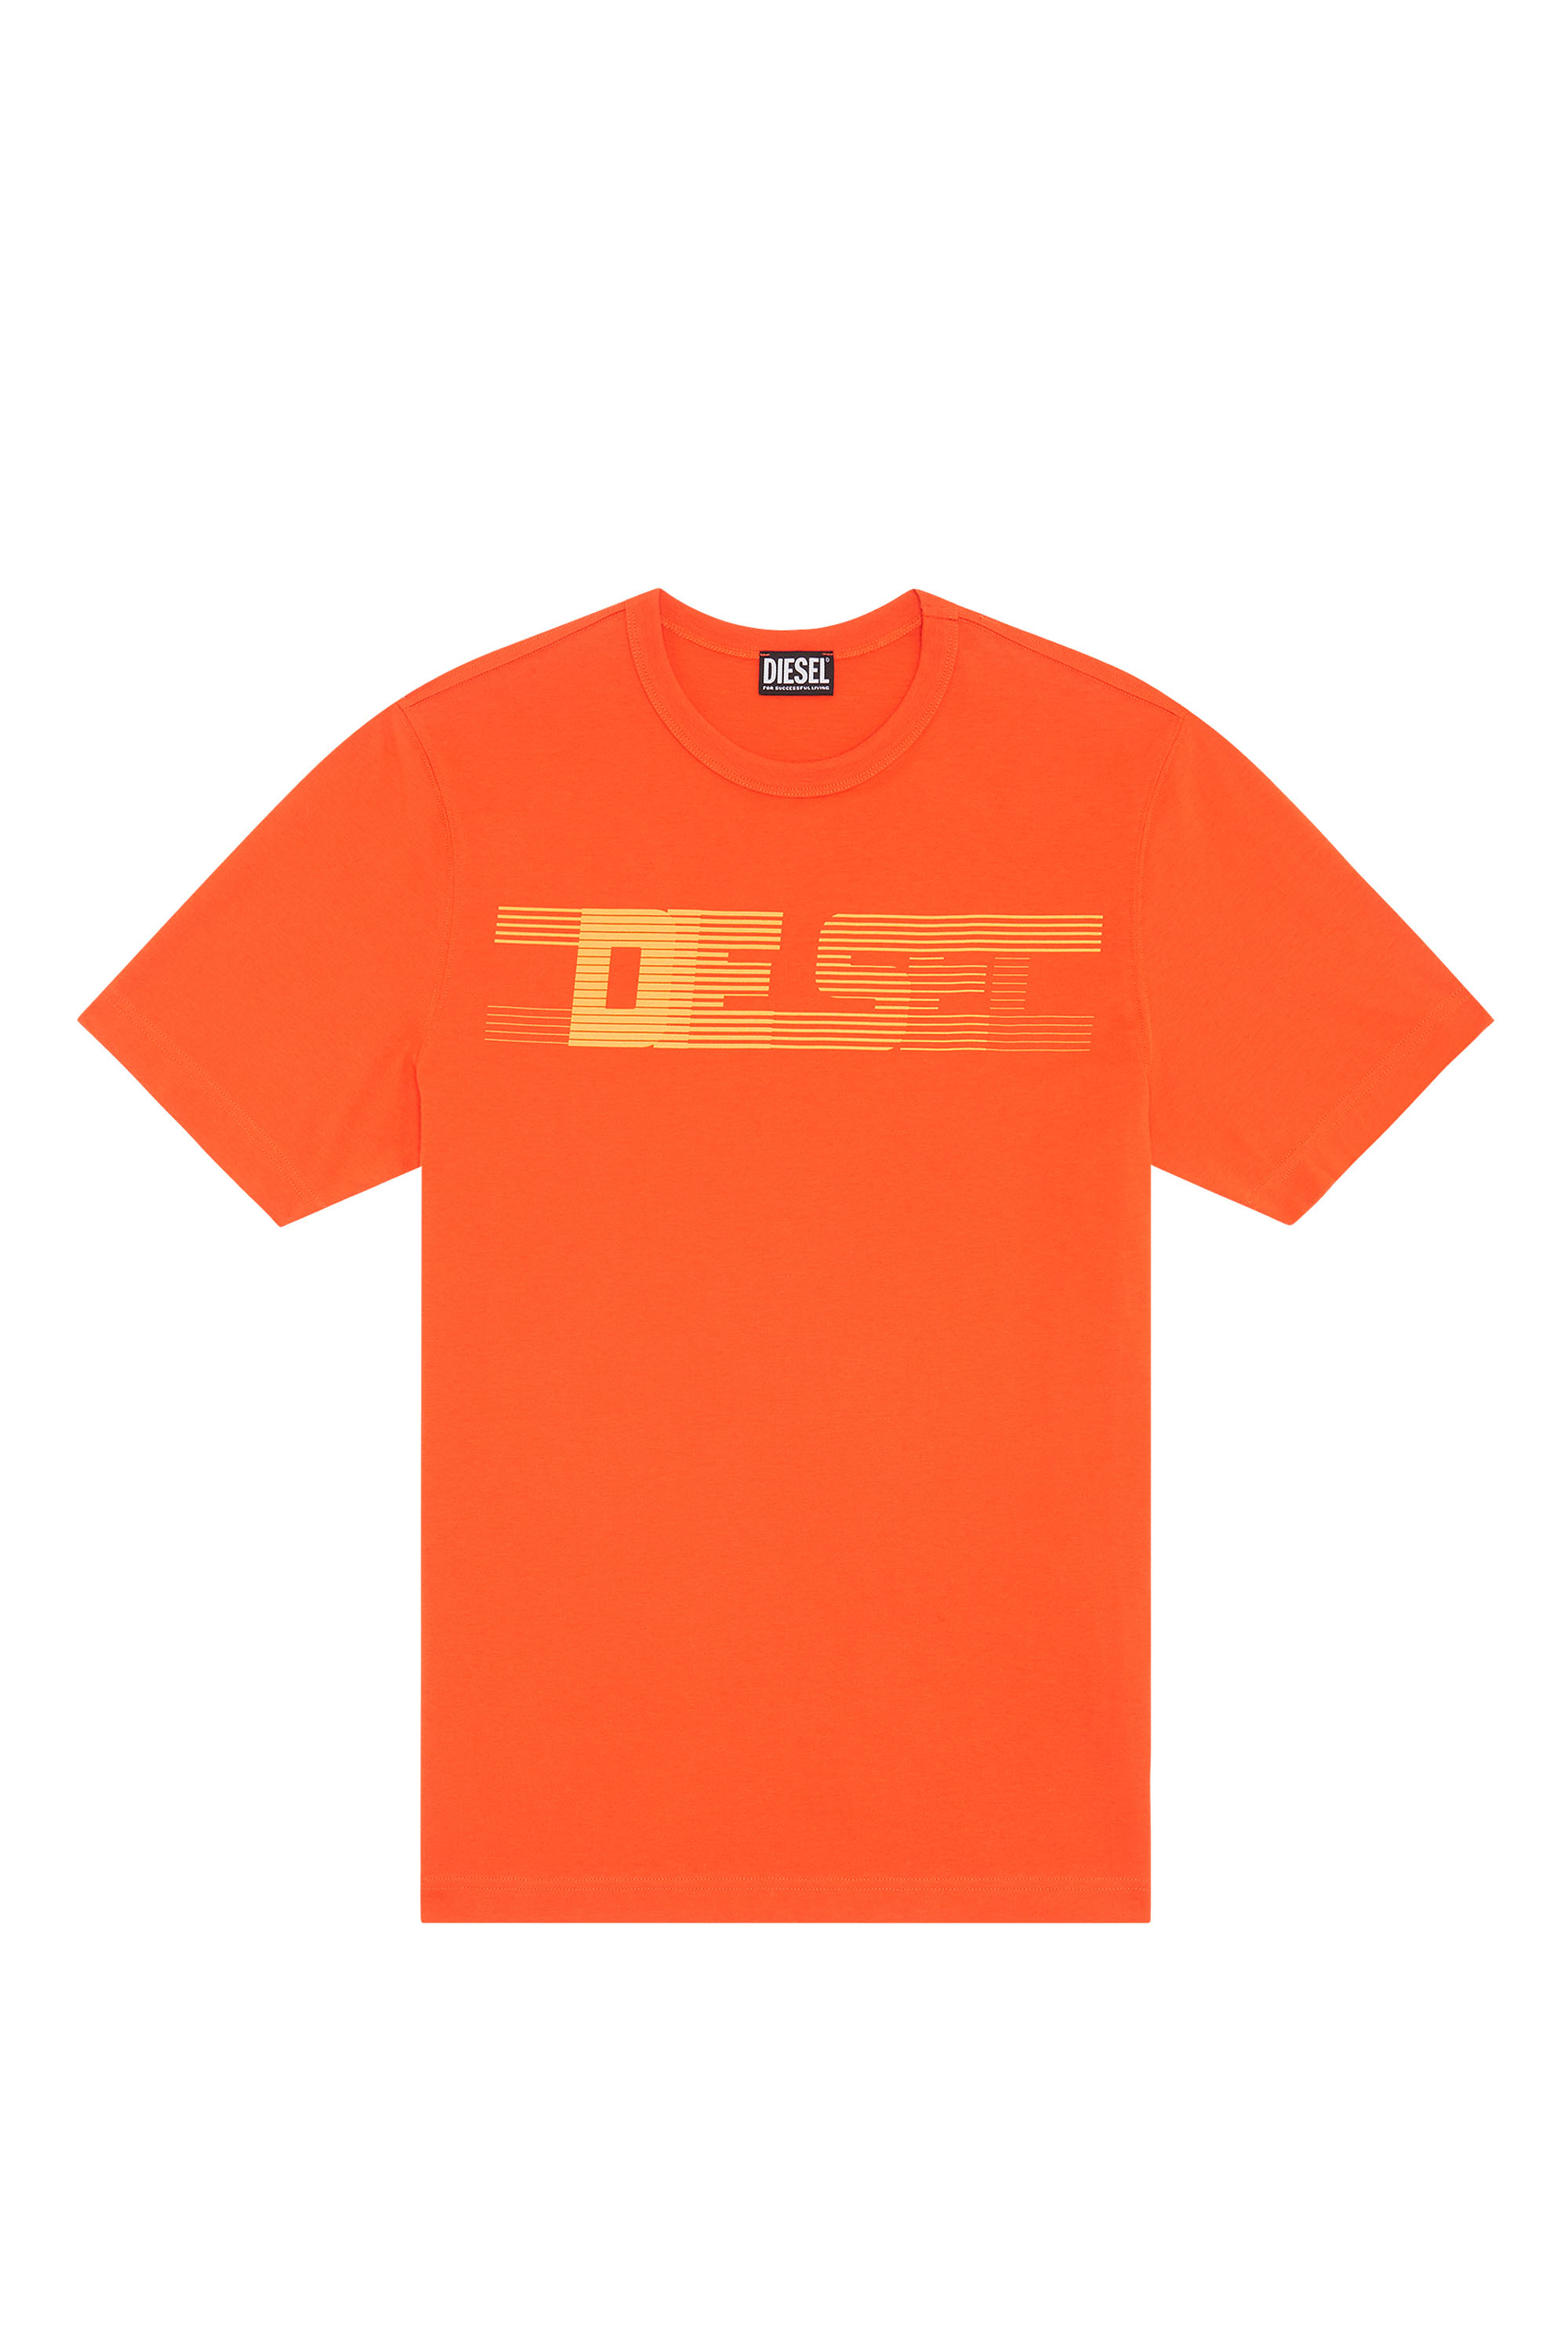 Diesel - T-JUST-E19, Orange - Image 6